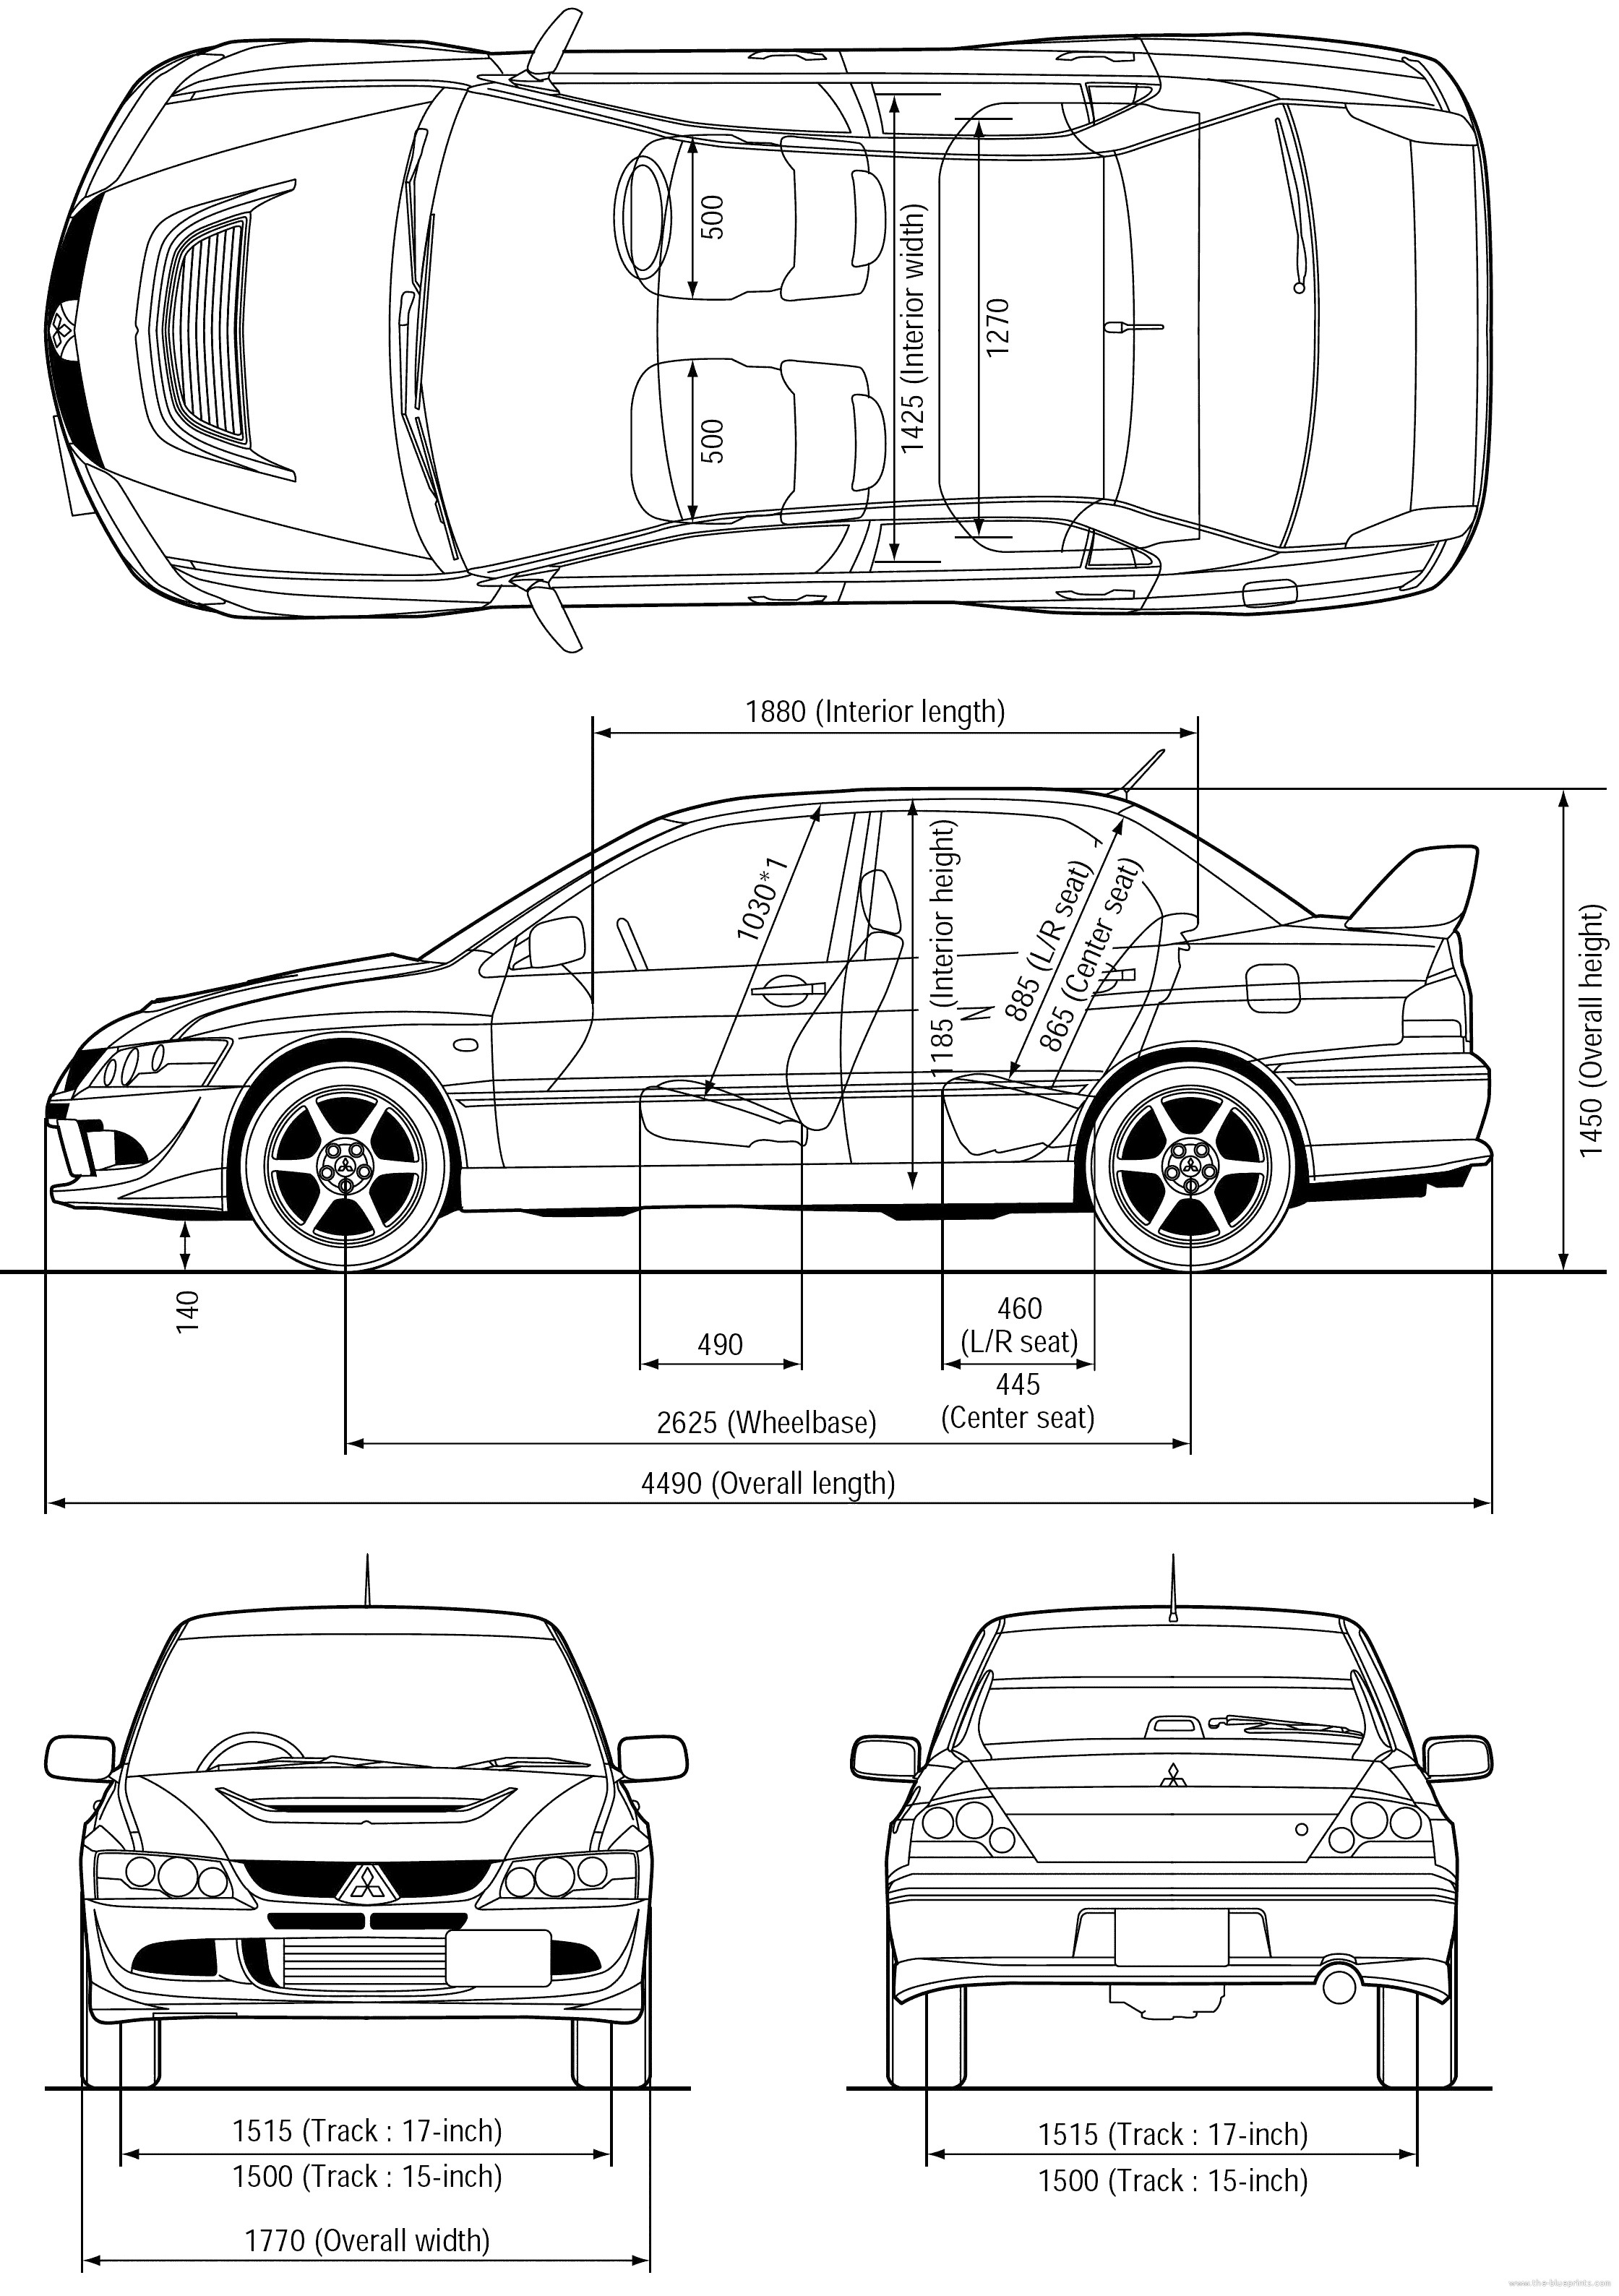 Diagram Of Car Engine Parts Mitsubishi Lancer Evo 8 Cars Pinterest Of Diagram Of Car Engine Parts